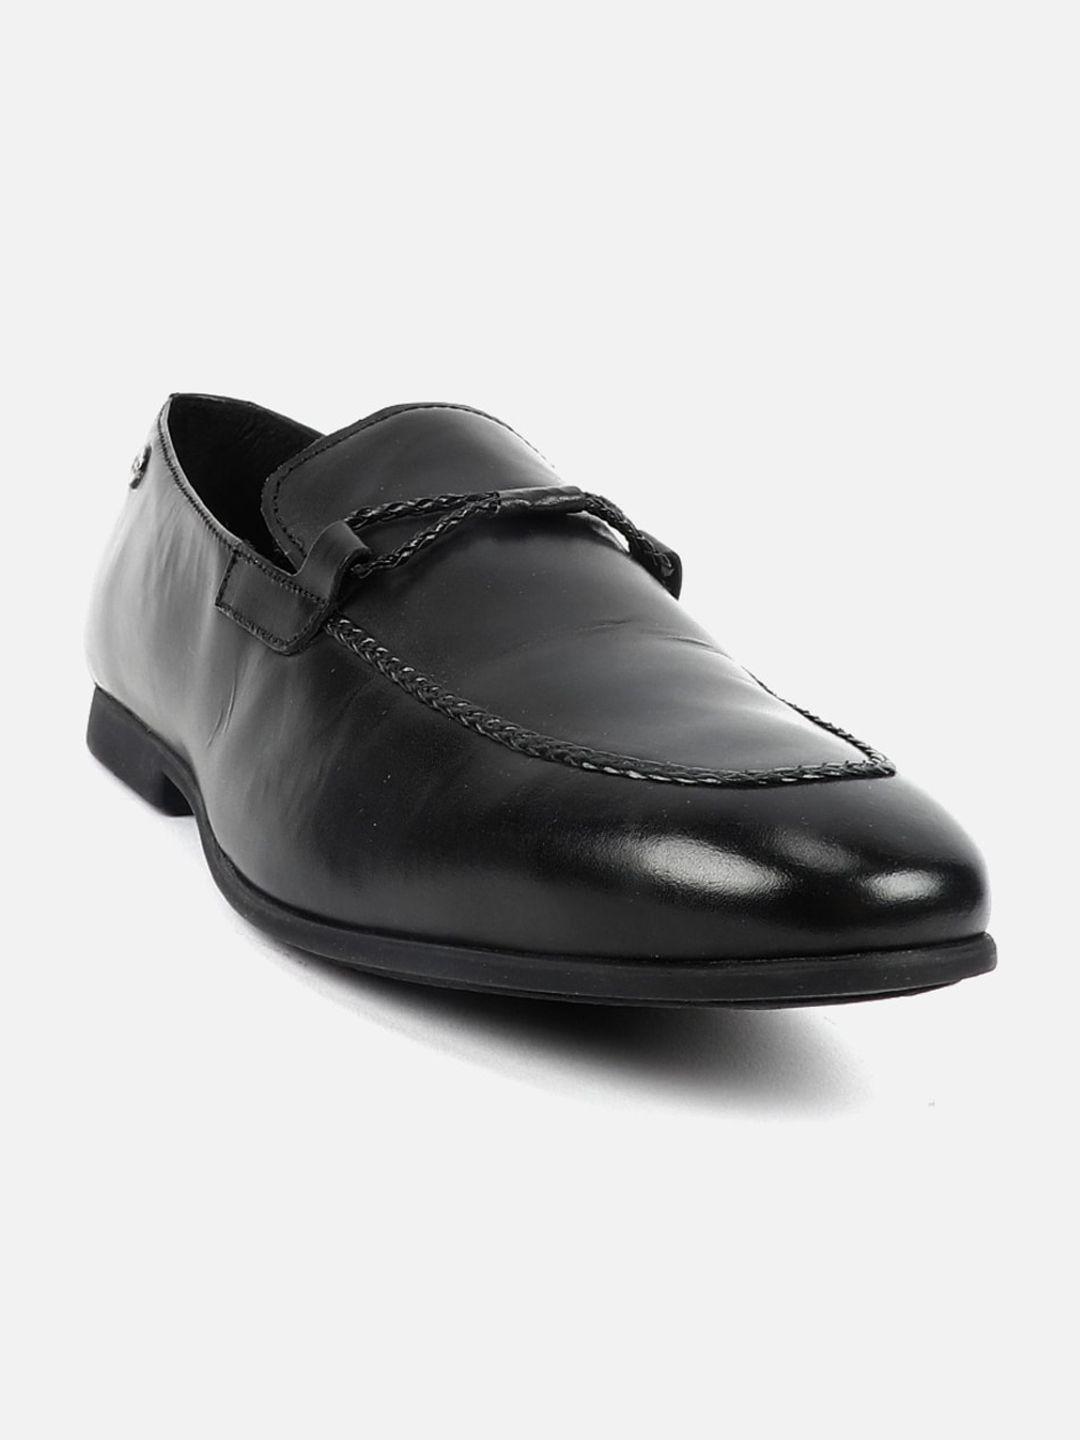 carlton london men leather formal horsebit loafers